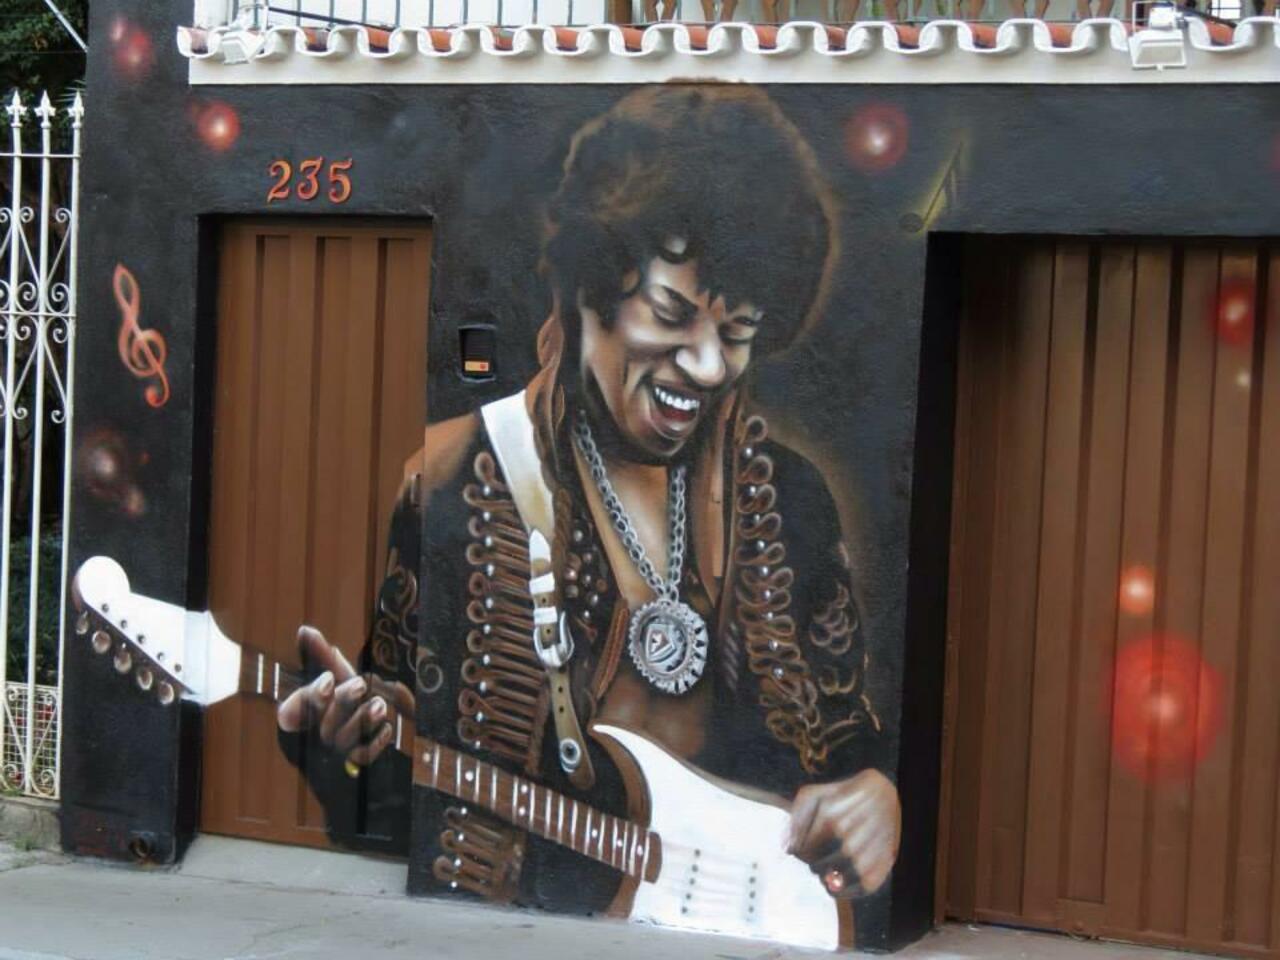 Jimi Hendrix Street Art by Nilo Zack 

#art #arte #graffiti #streetart http://t.co/yaznxhE9sa